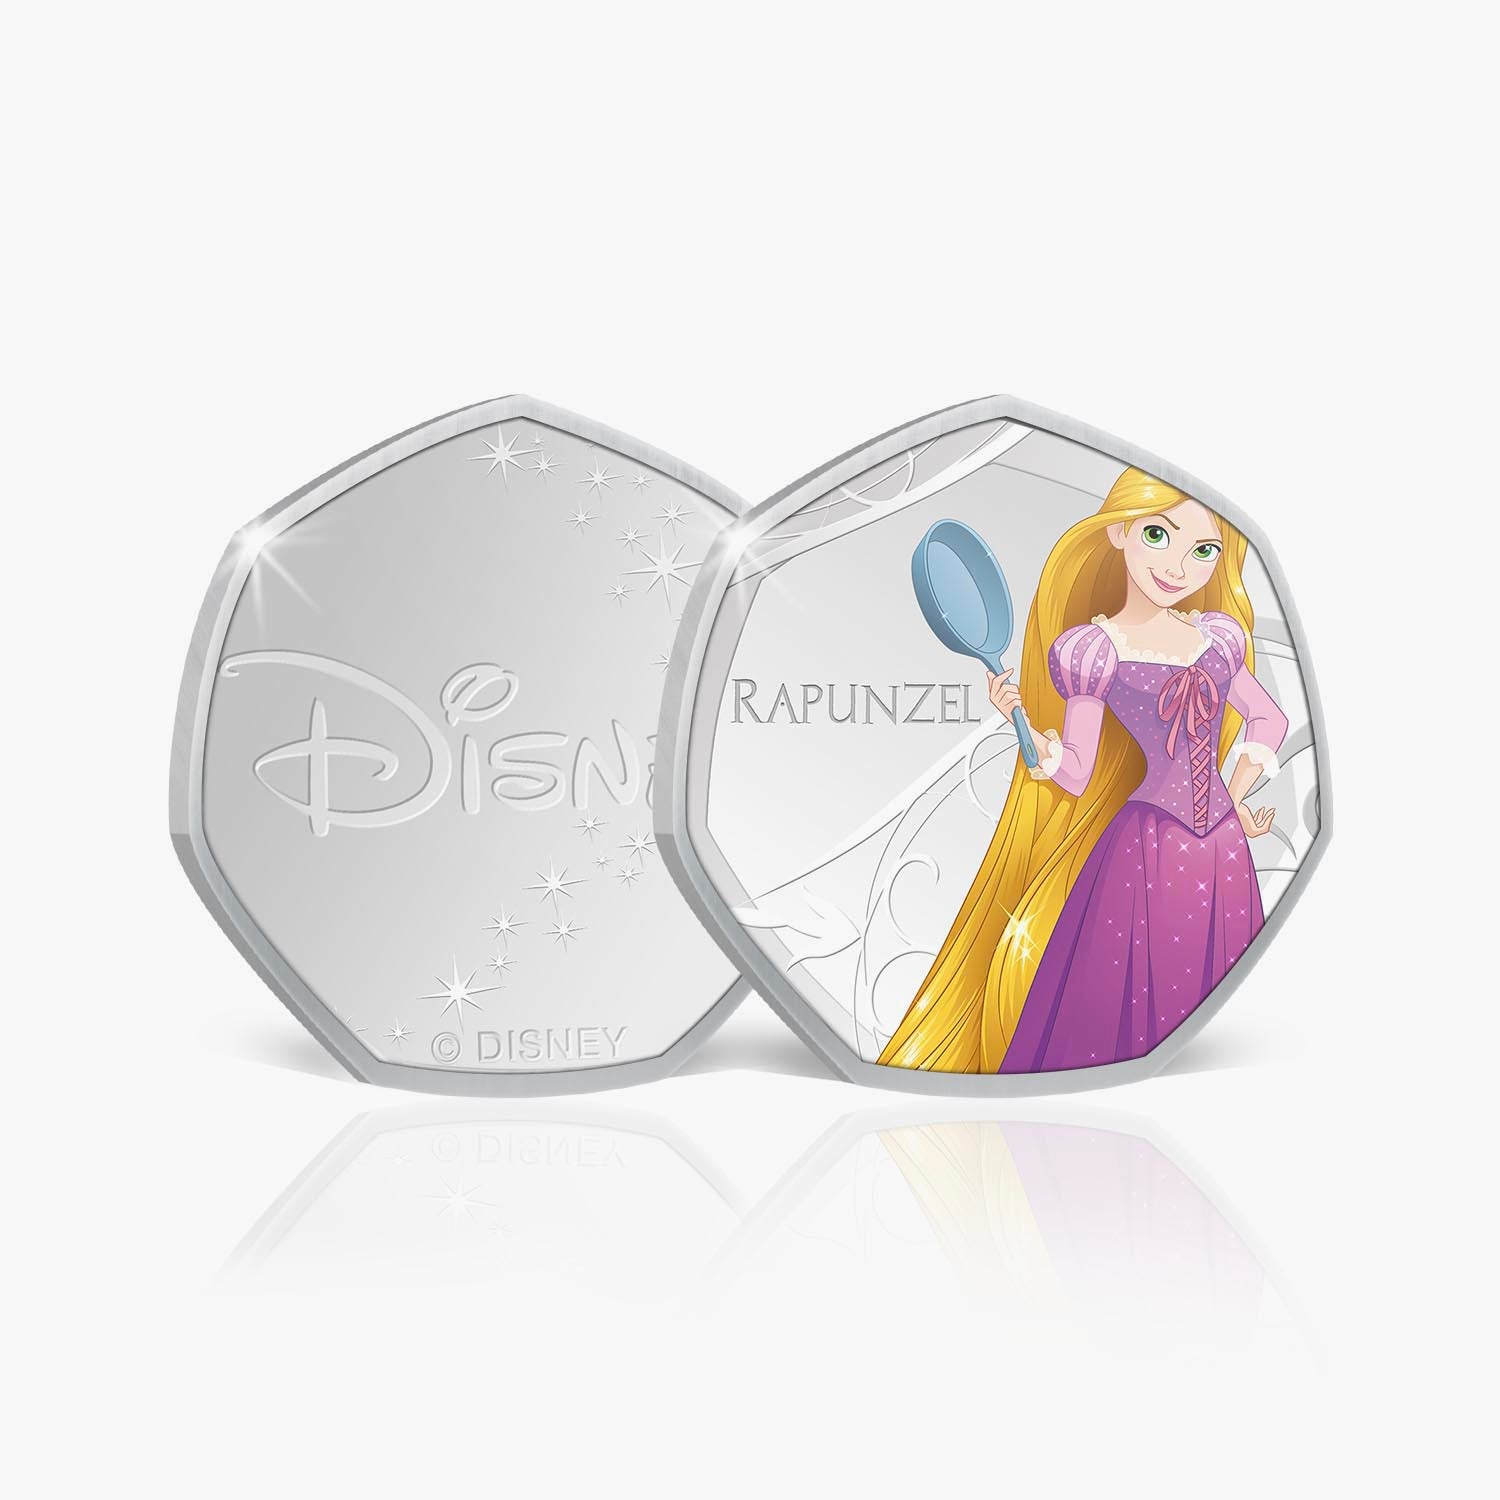 Rapunzel Silver-Plated Commemorative